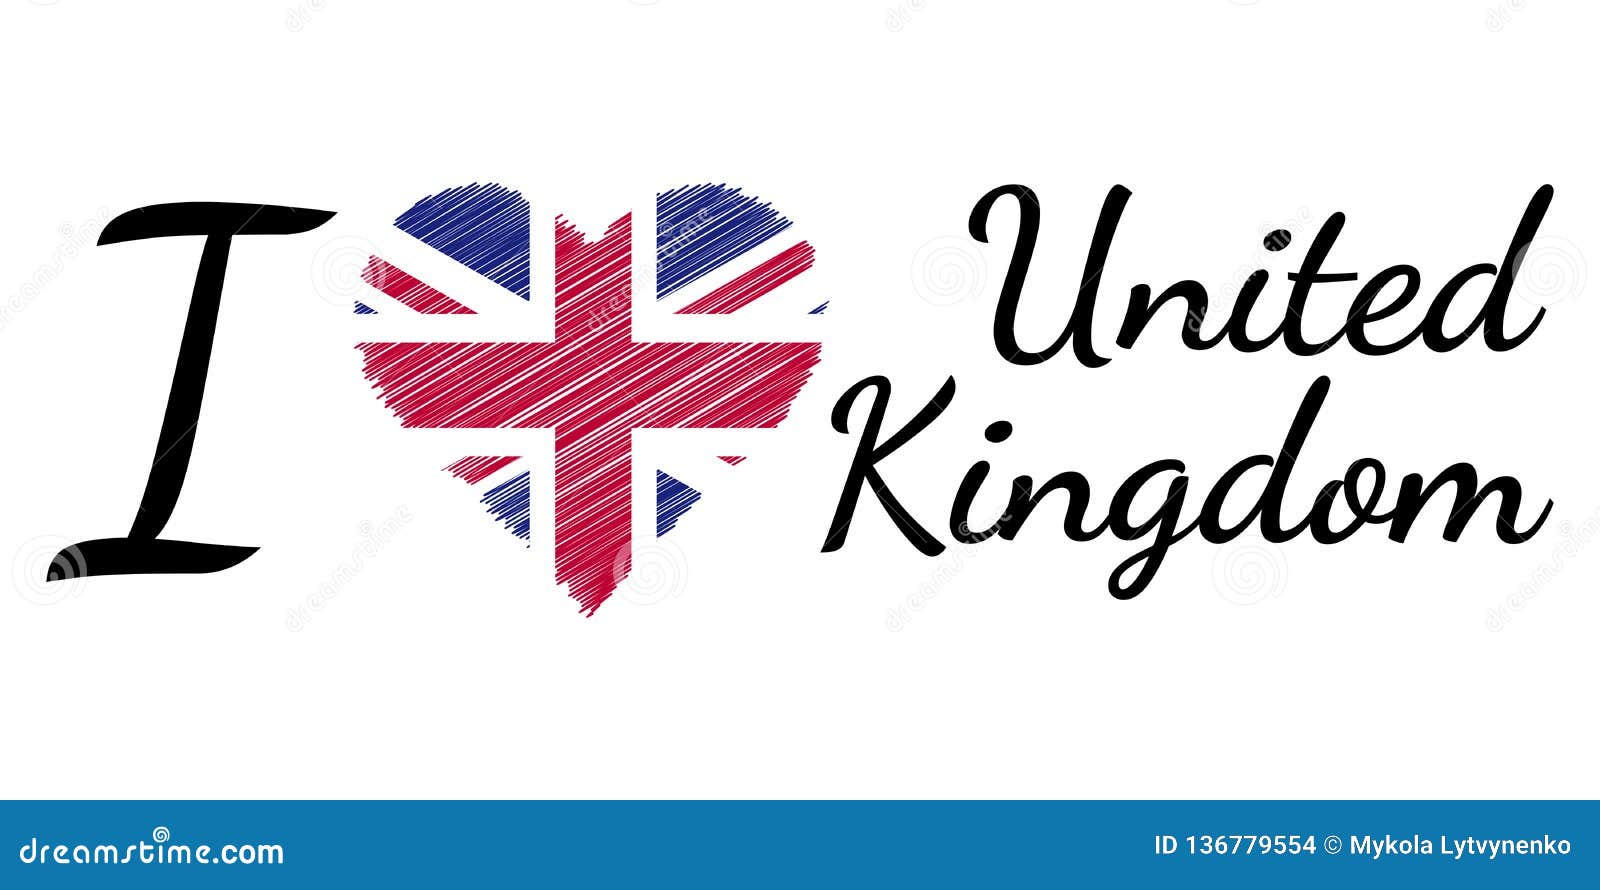 Love uk. Люблю свою страну английский. United Kingdom картинка с надписью. Love USA.